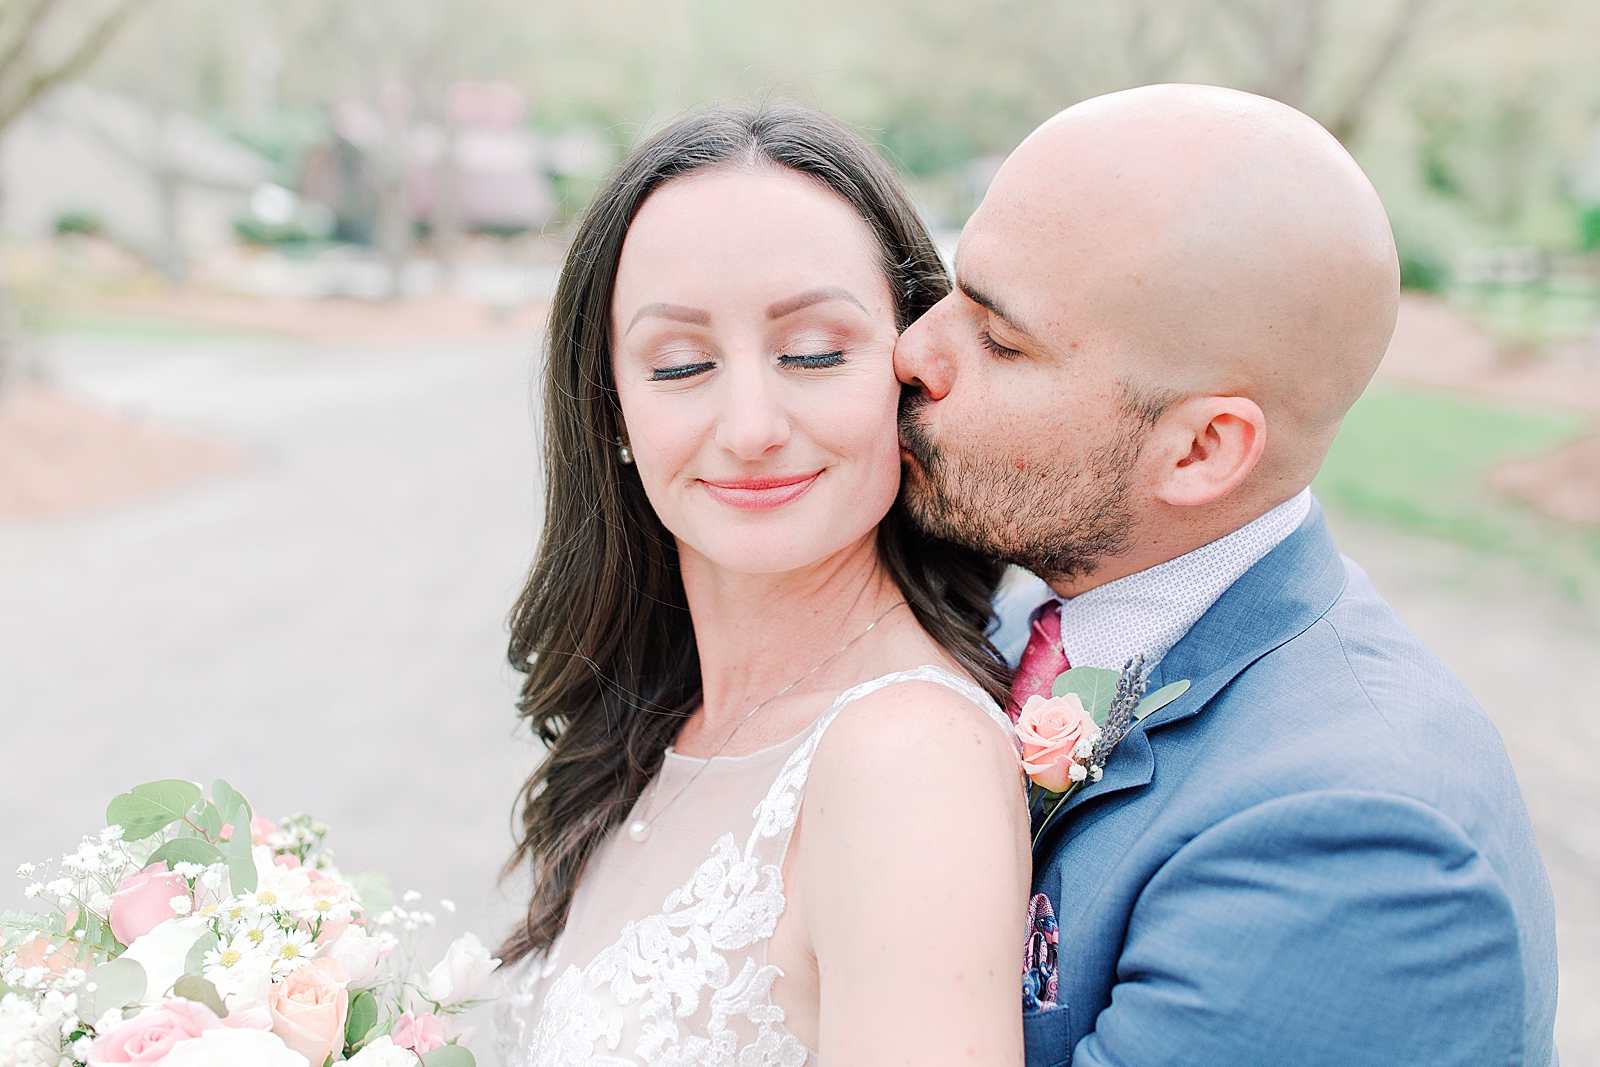 Spring Hawkesdene Wedding Groom kissing bride on cheek Photo